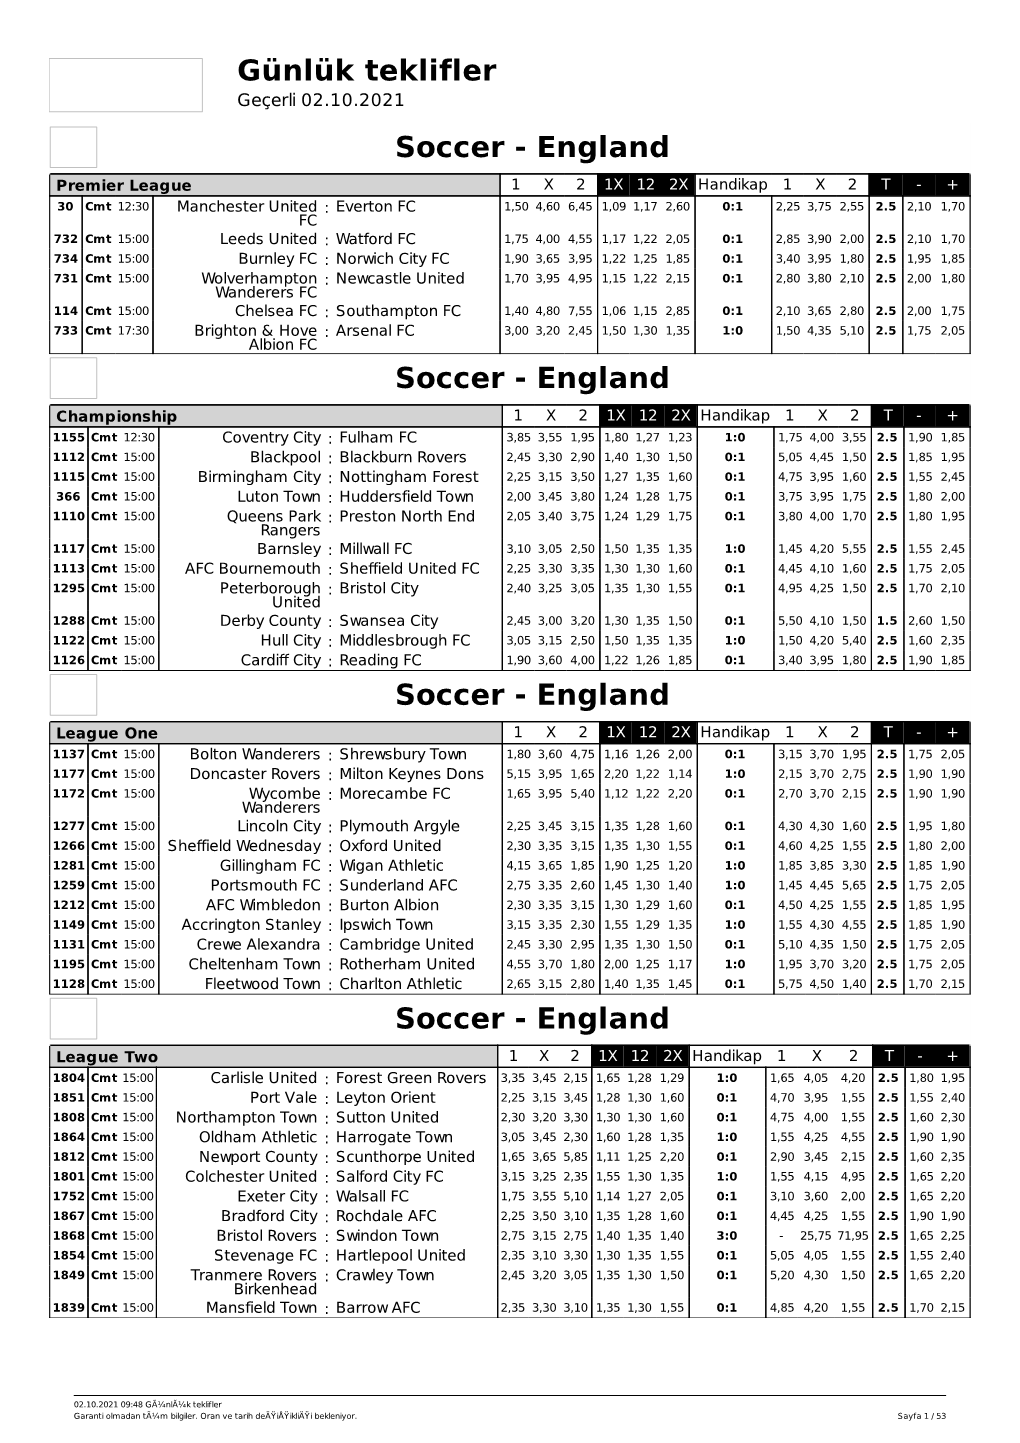 Soccer - England